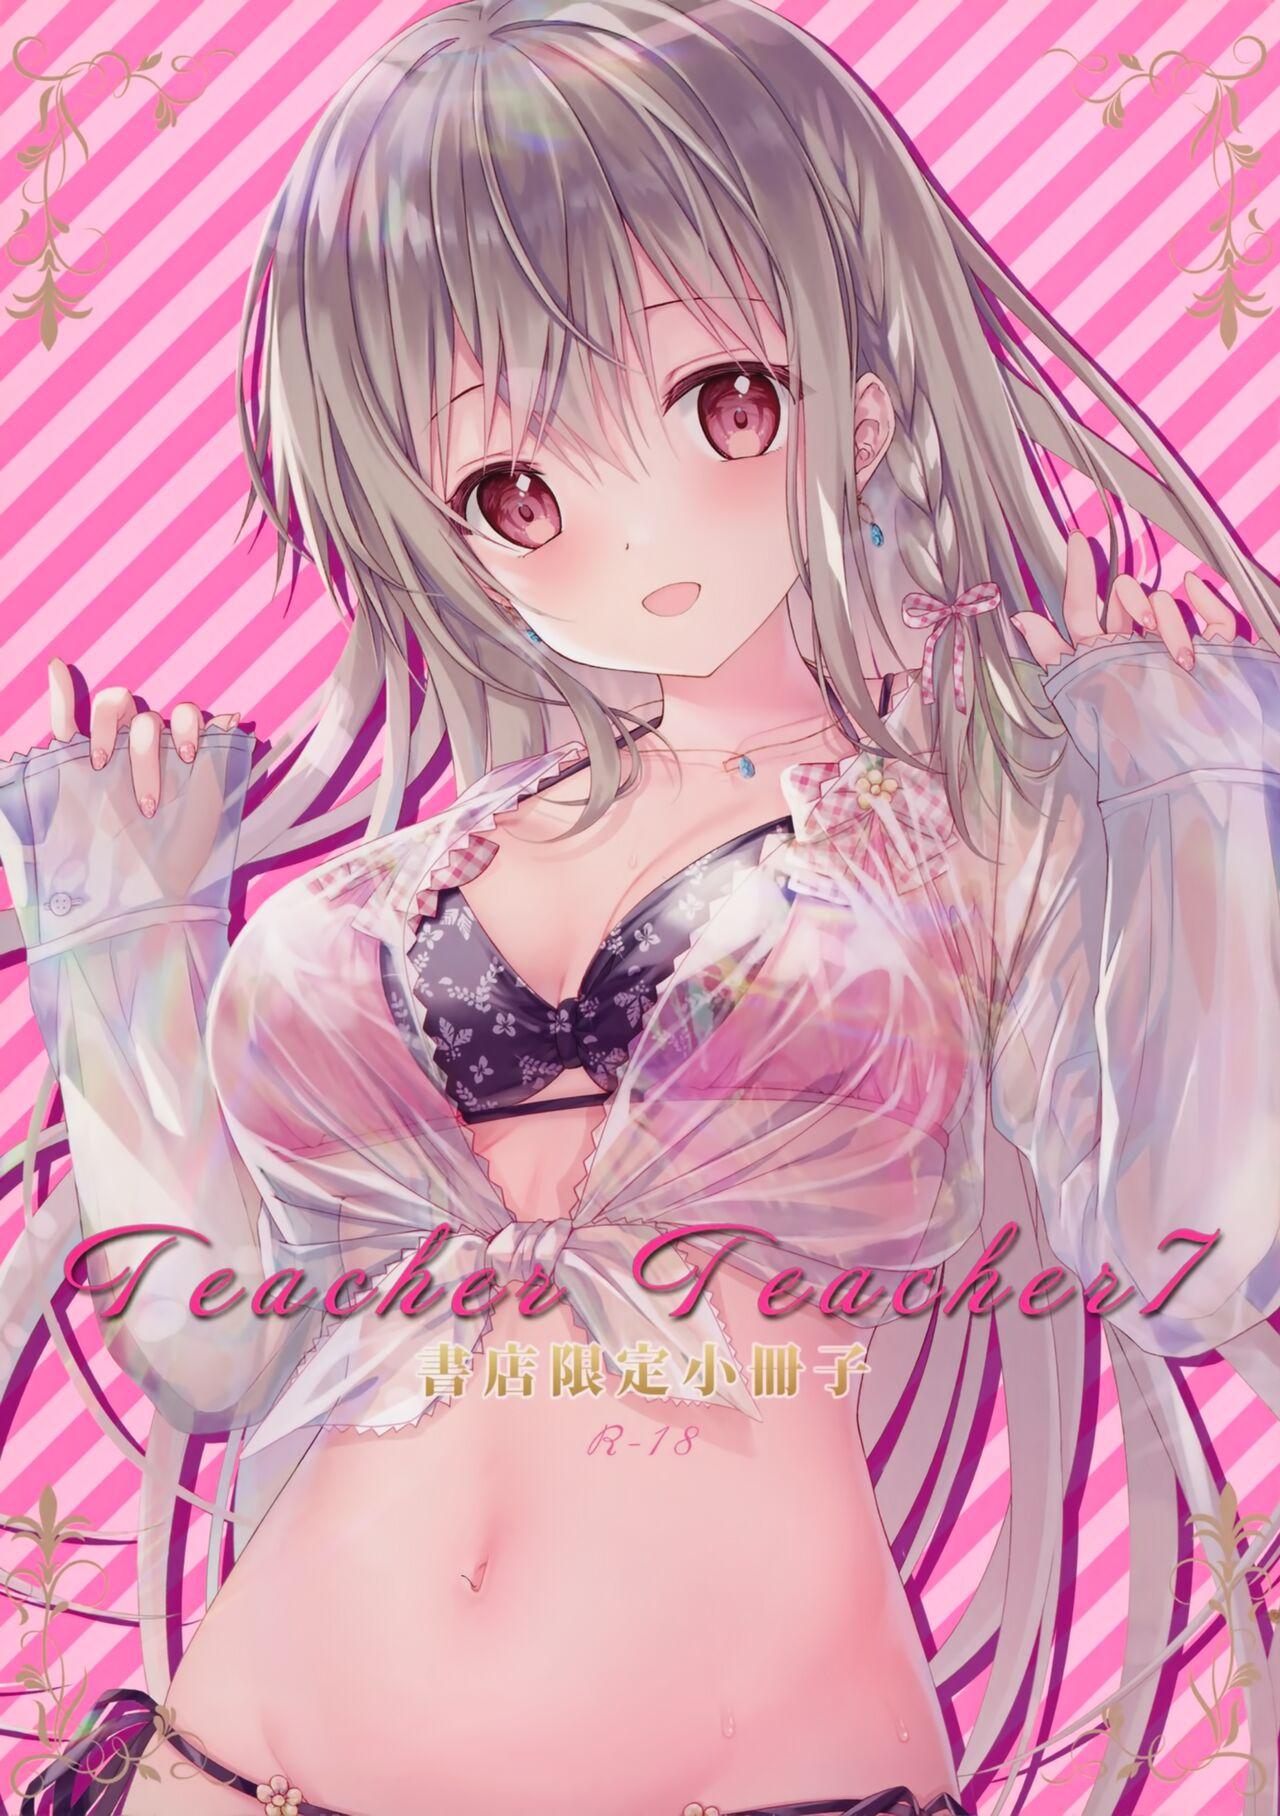 TeacherTeacher7 + Omake 33